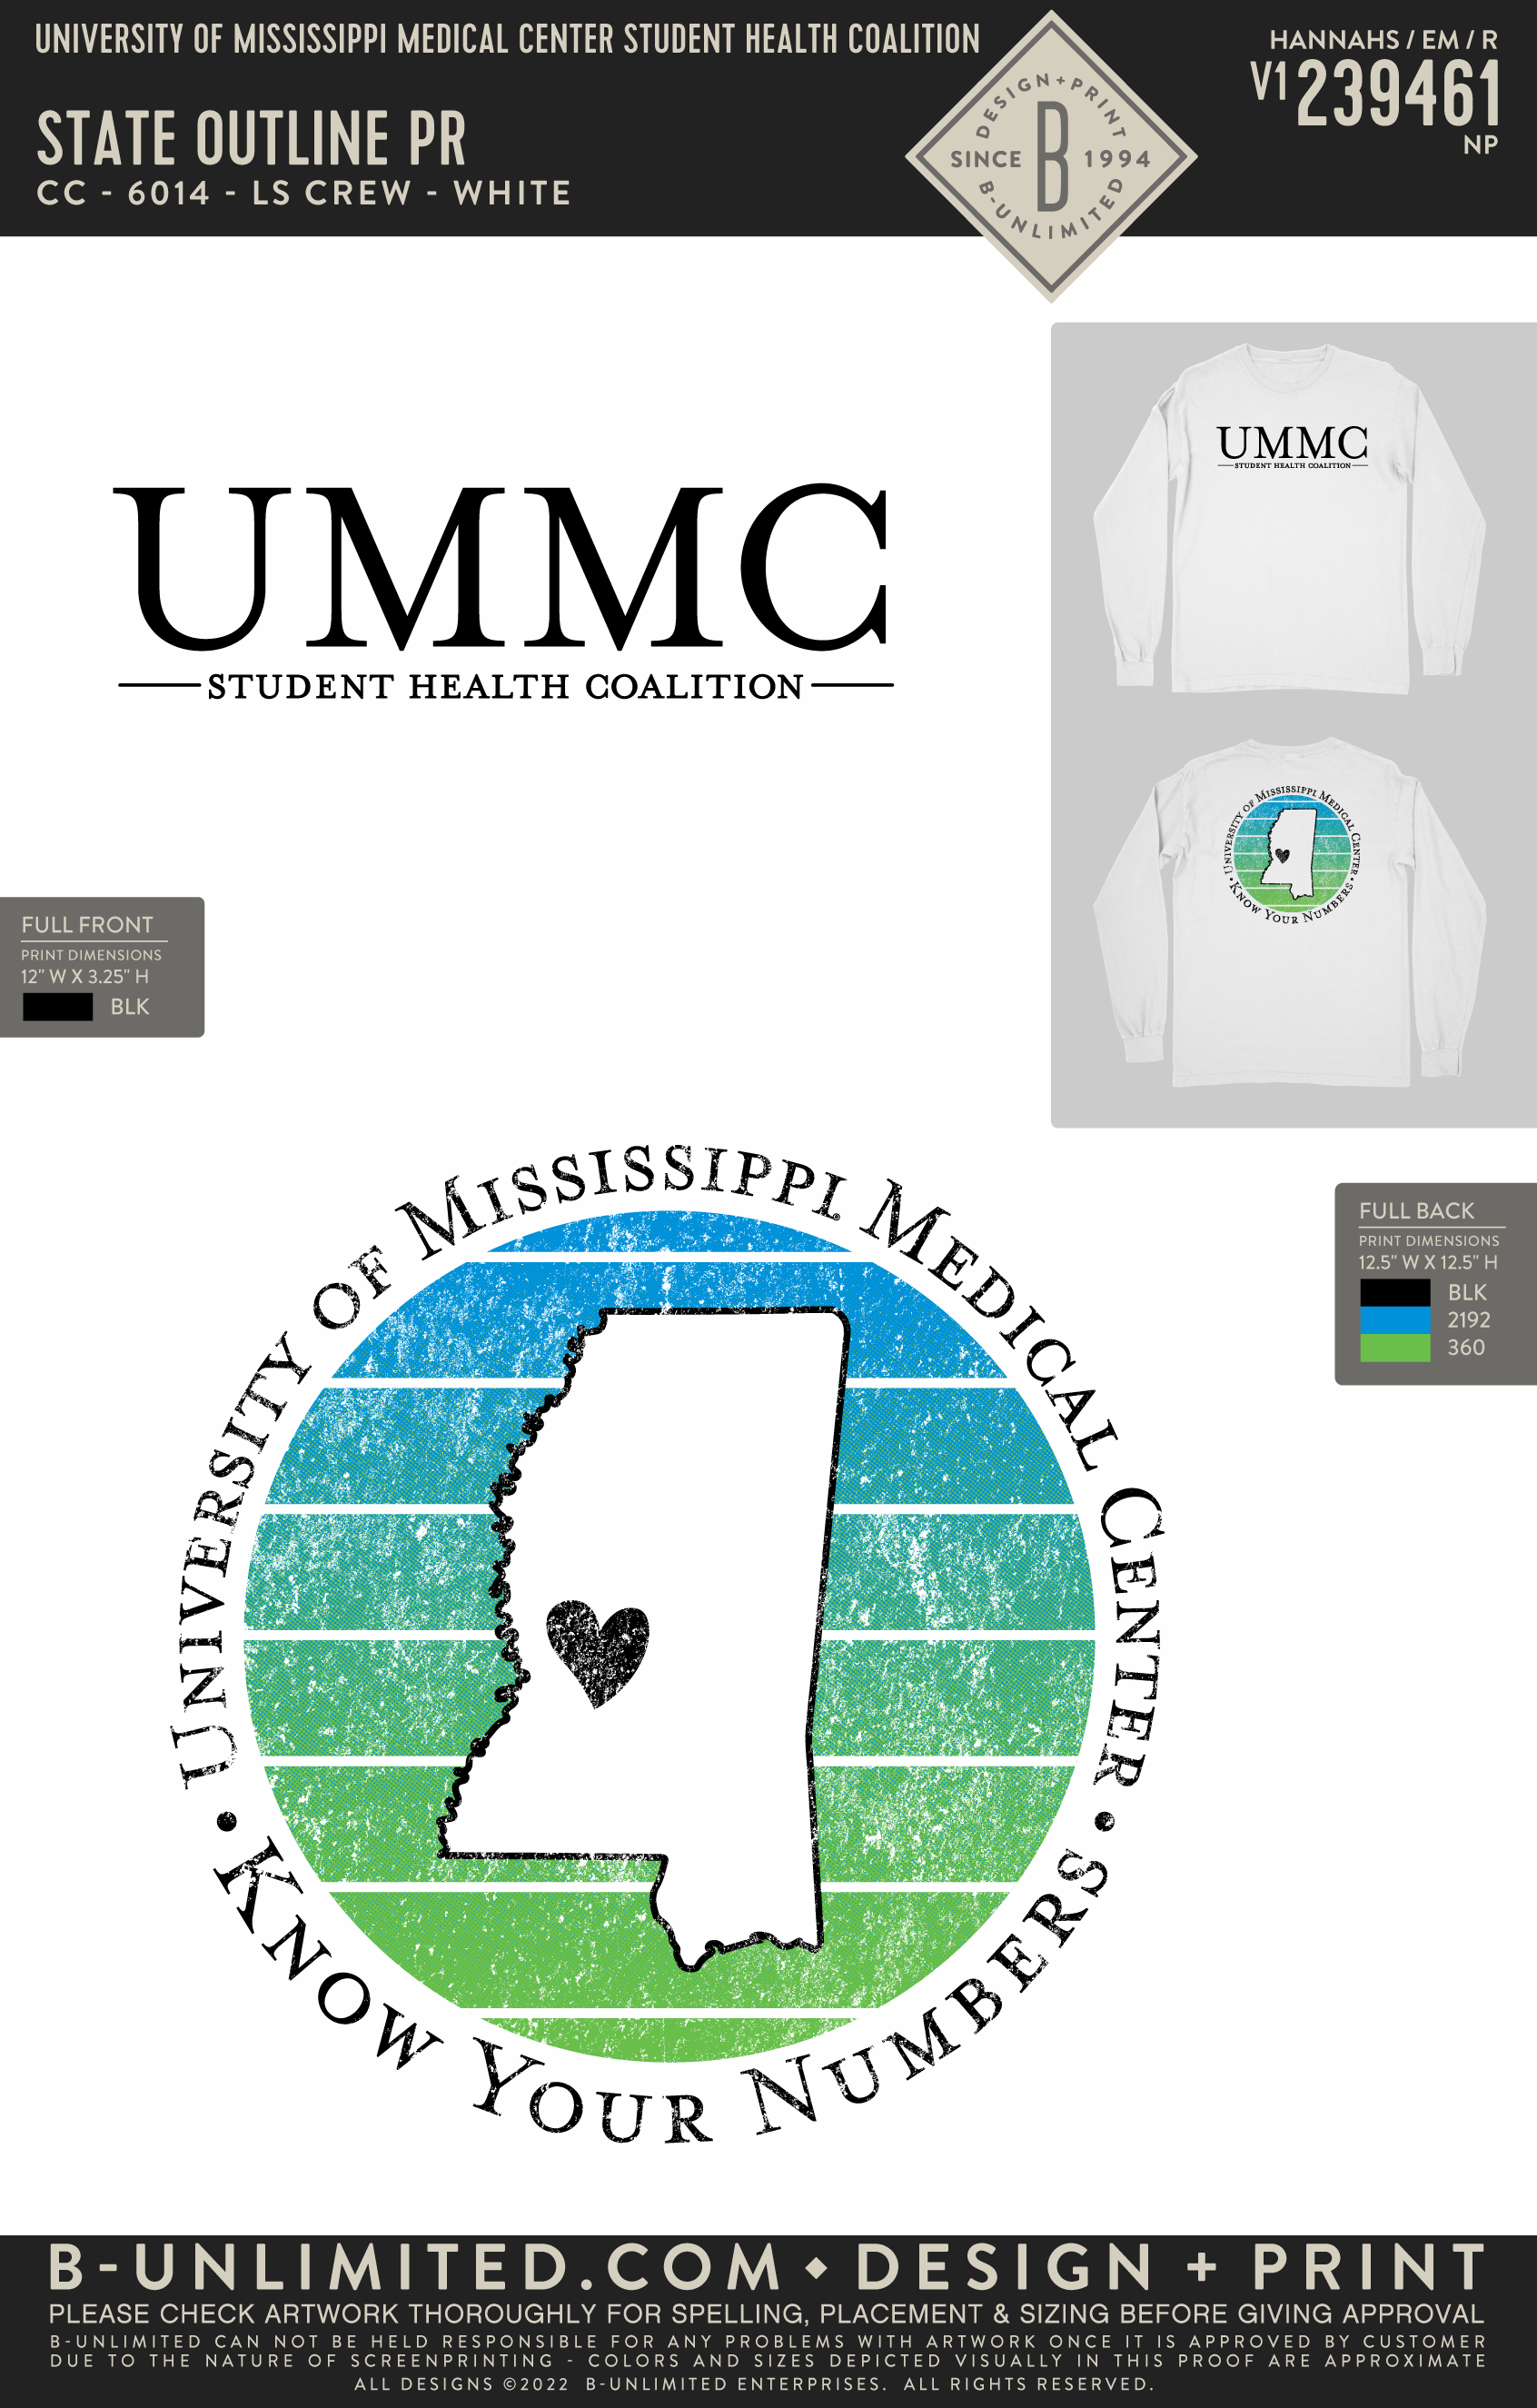 University of Mississippi Medical Center Student Health Coalition - State Outline PR - CC - 6014 - LS Crew - White